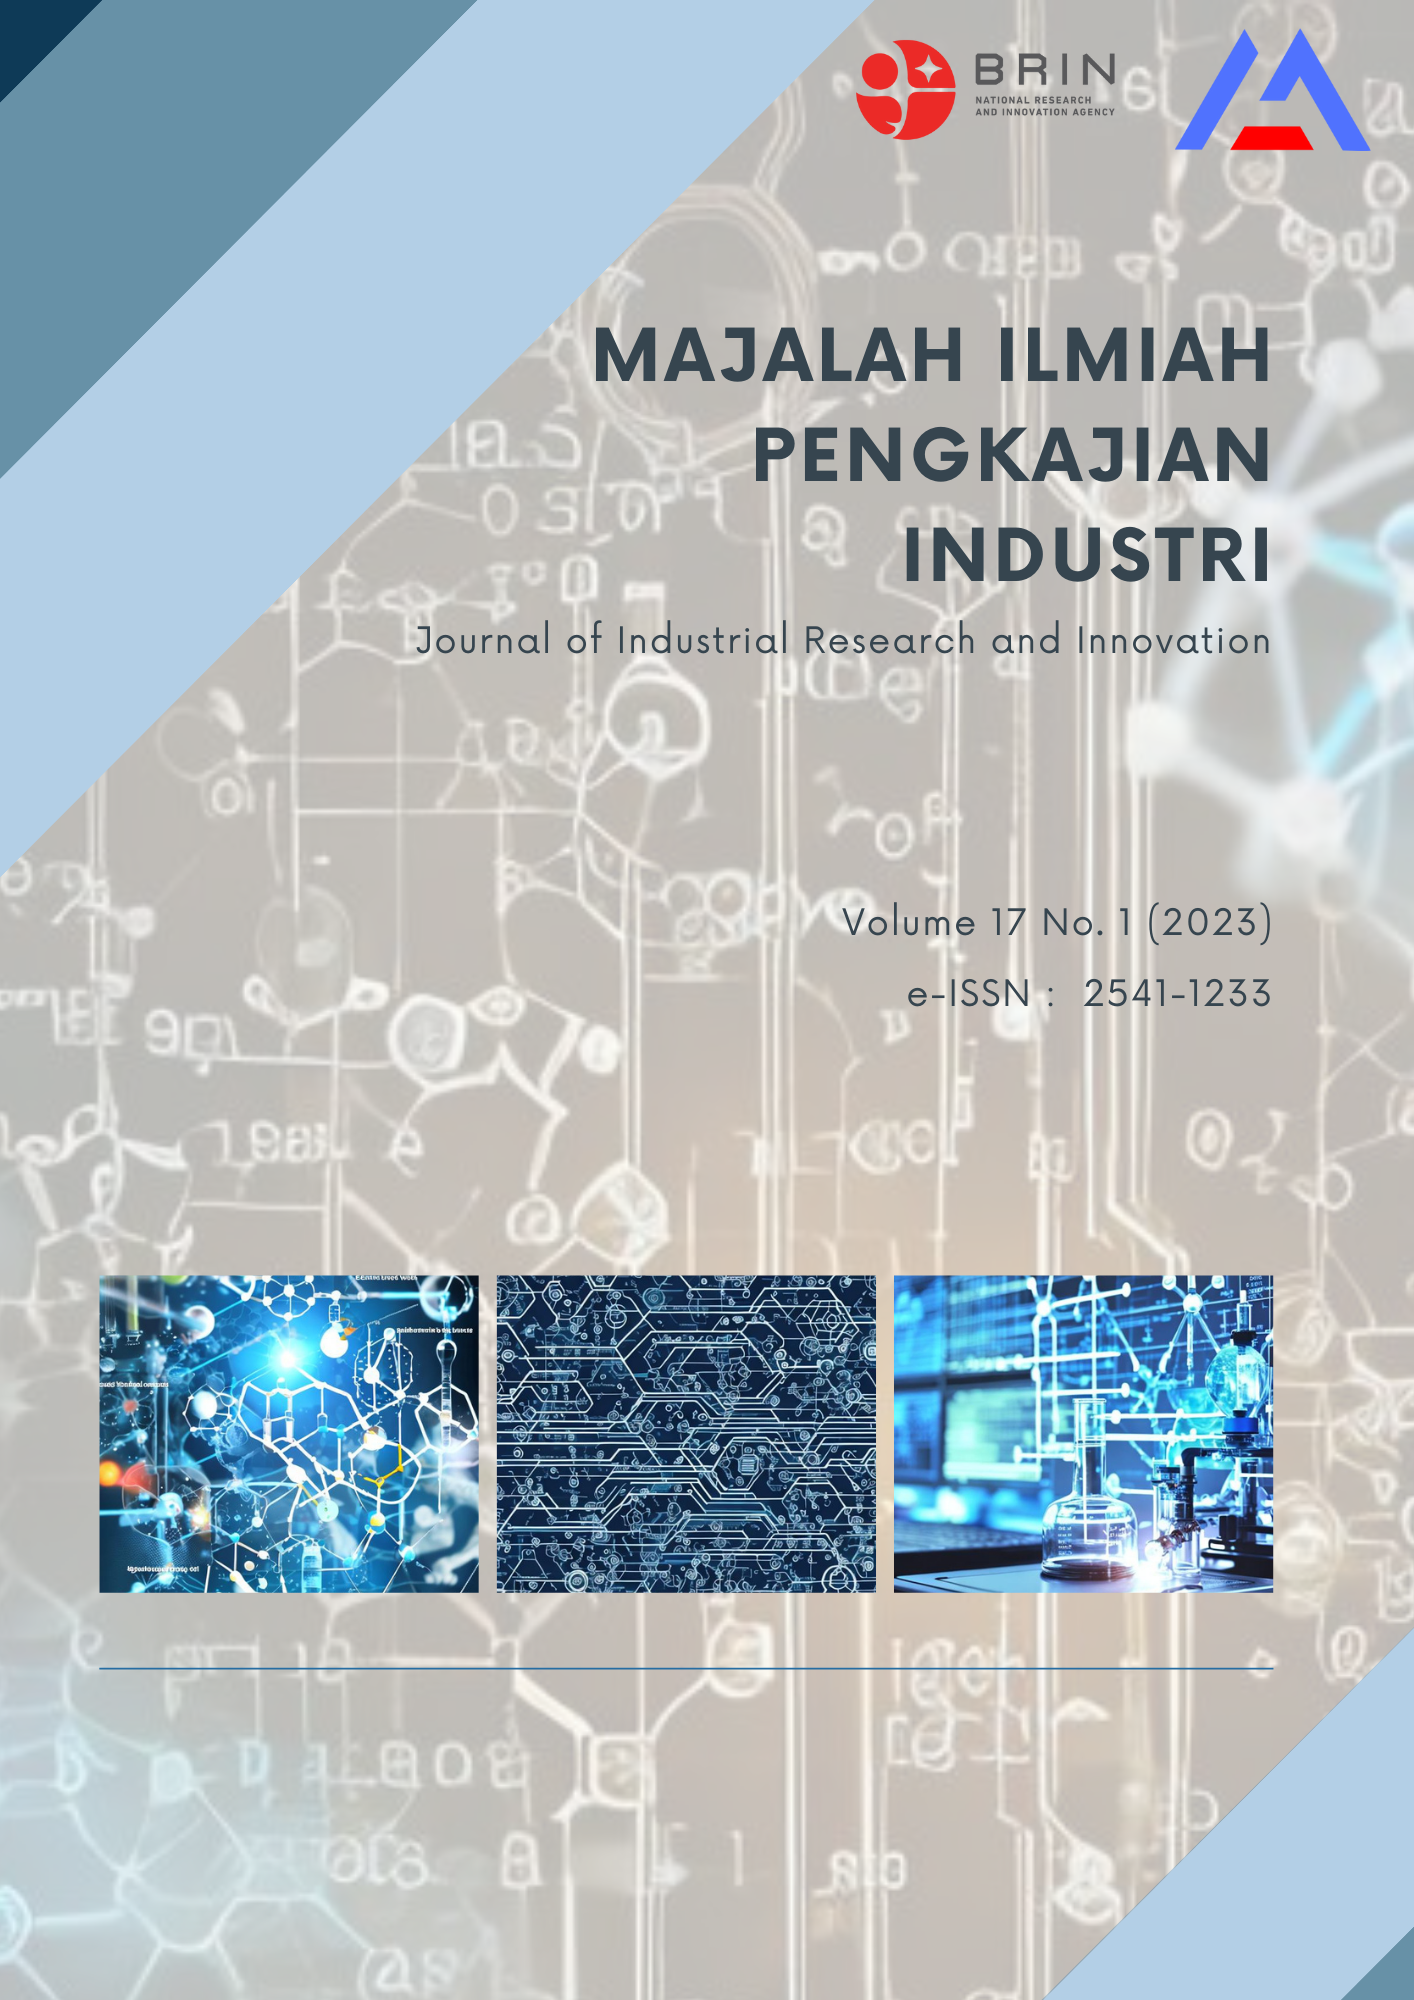 					View Vol. 17 No. 1 (2023): Majalah Ilmiah Pengkajian Industri; Journal of Industrial Research and Innovation
				